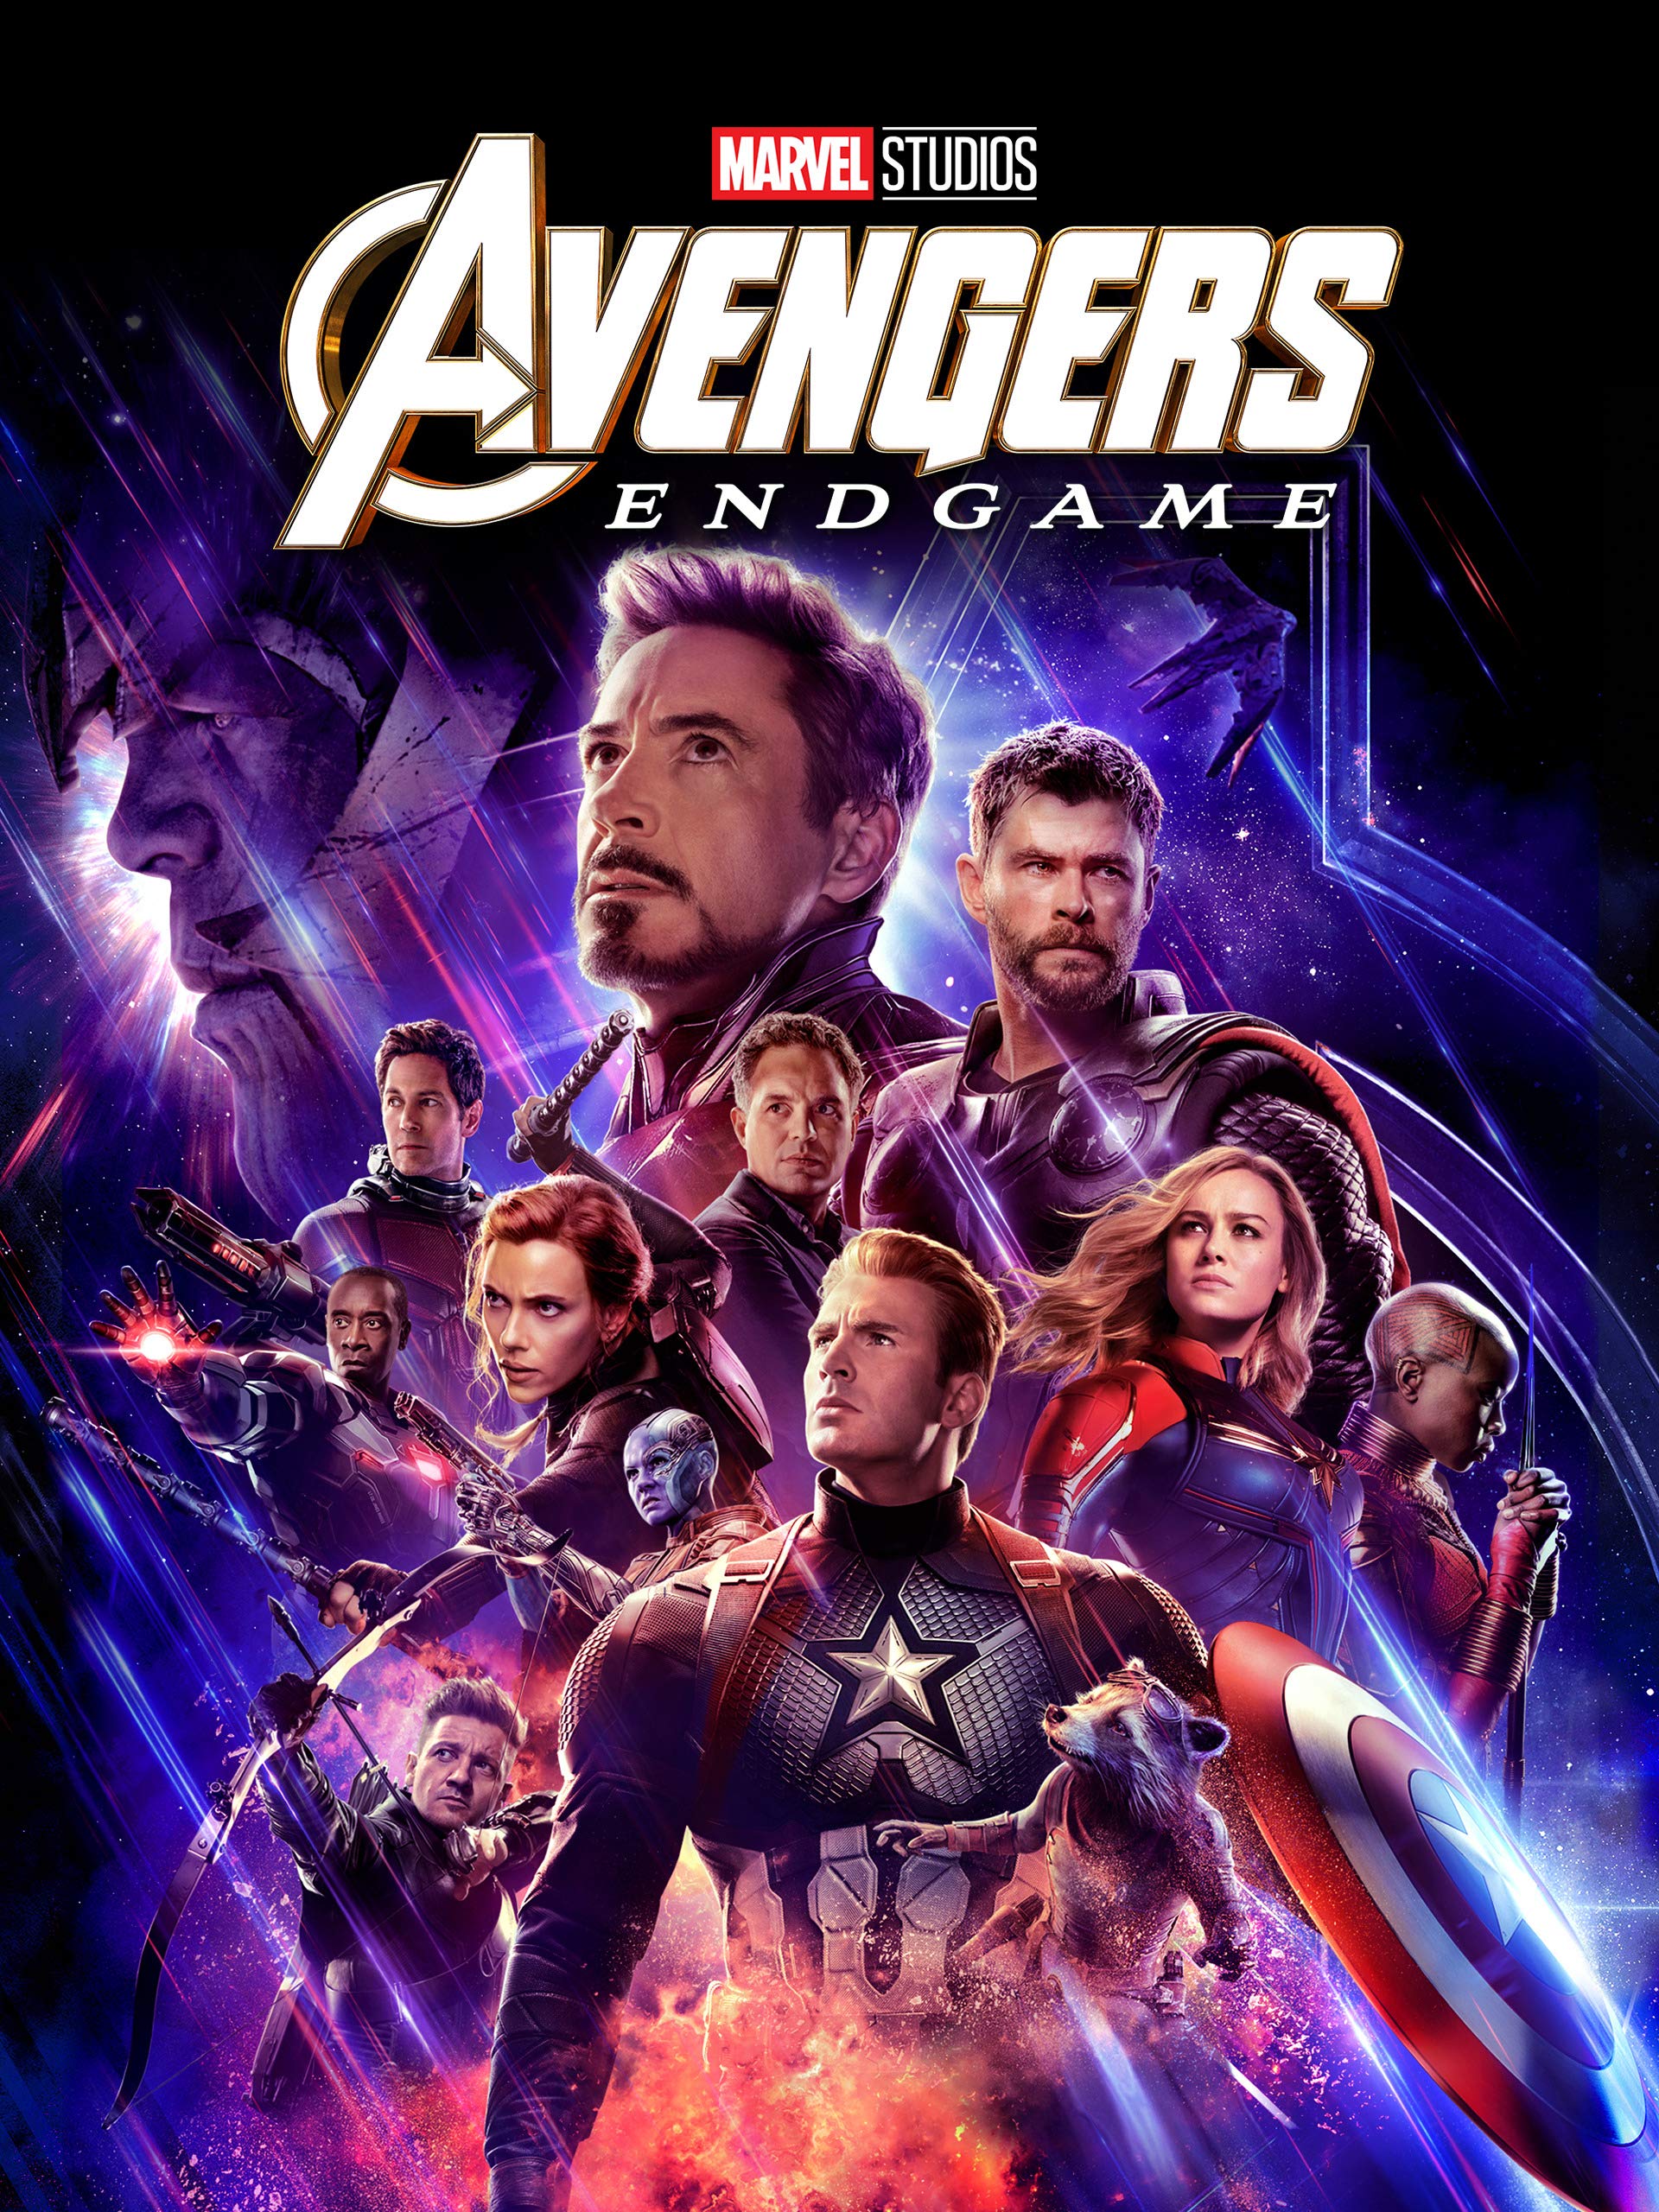 Avengers: Endgame 4K UHD Digital Review and Clips